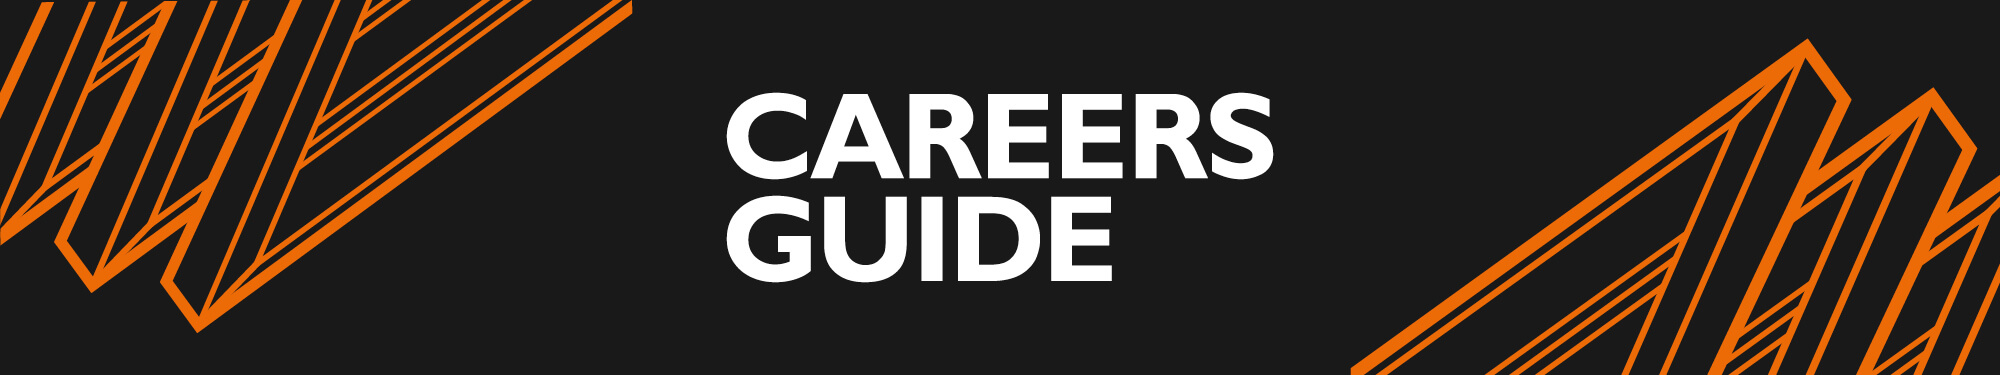 Careers guide